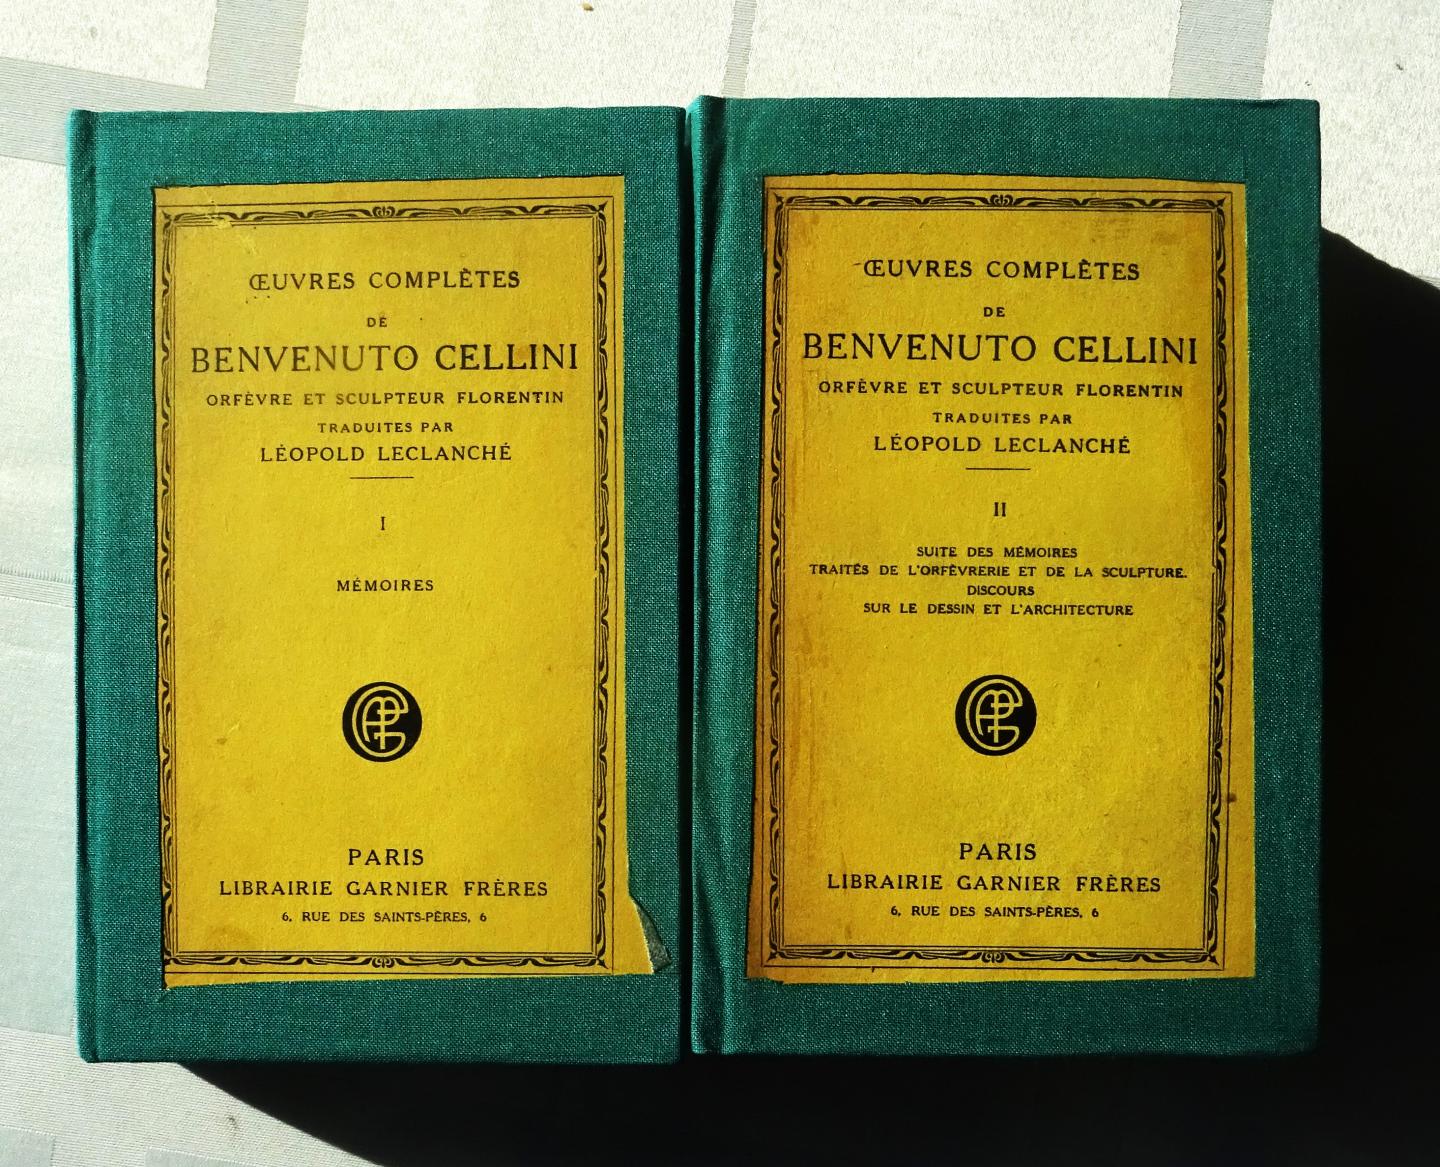 Leclanche, Leopold - Oevres completes de Benvenuto Chellini, deel I en II